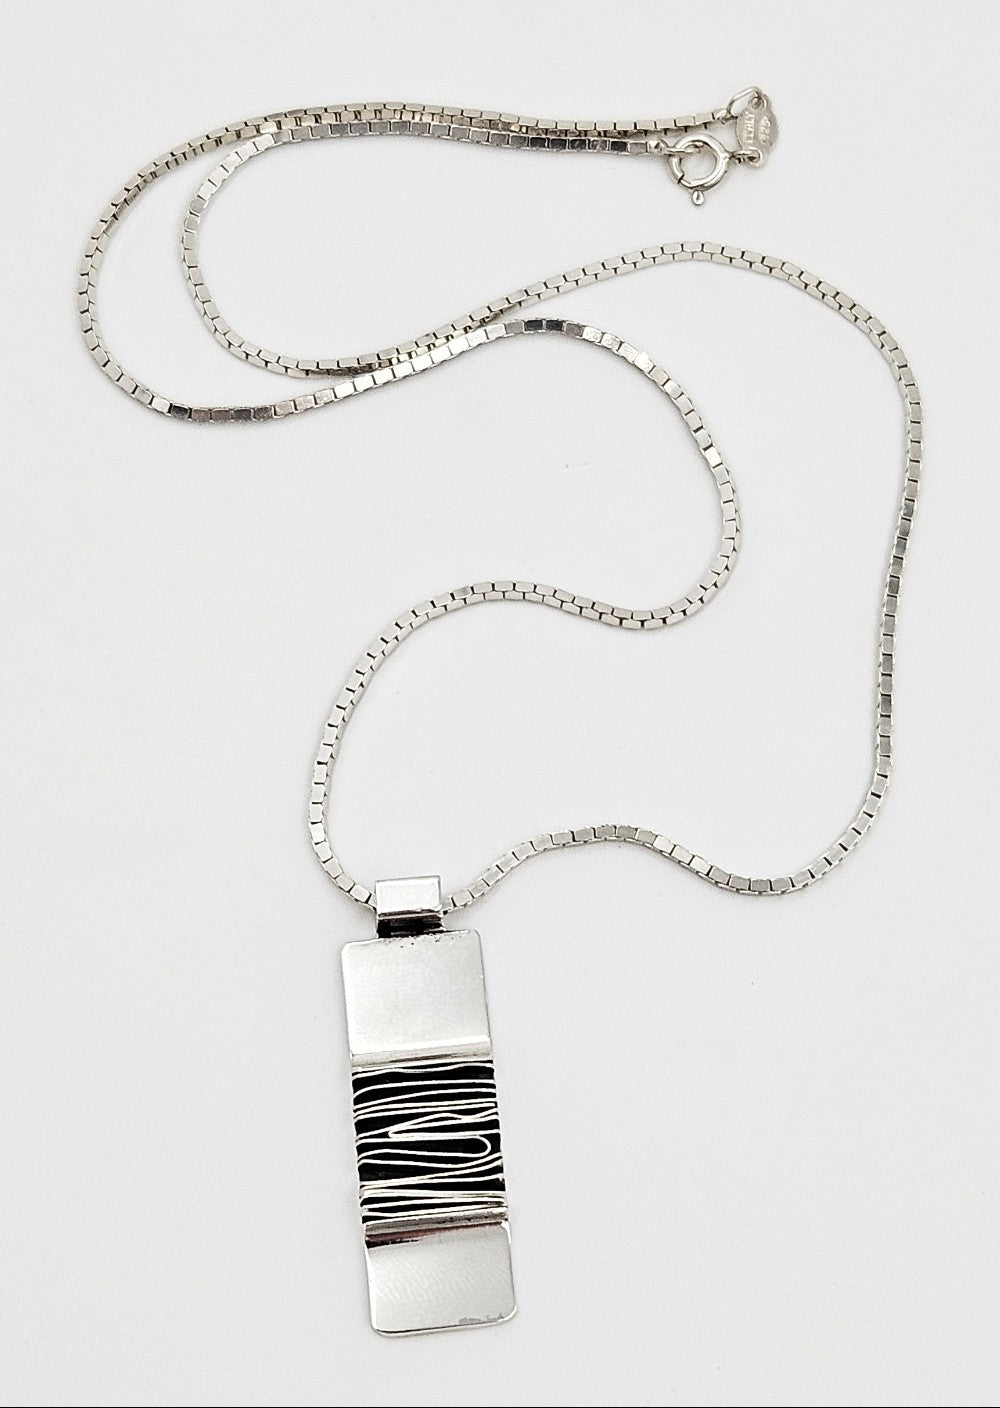 Elegant Brenna Glanzer Klassen Sterling Silver Abstract Modernist Necklace